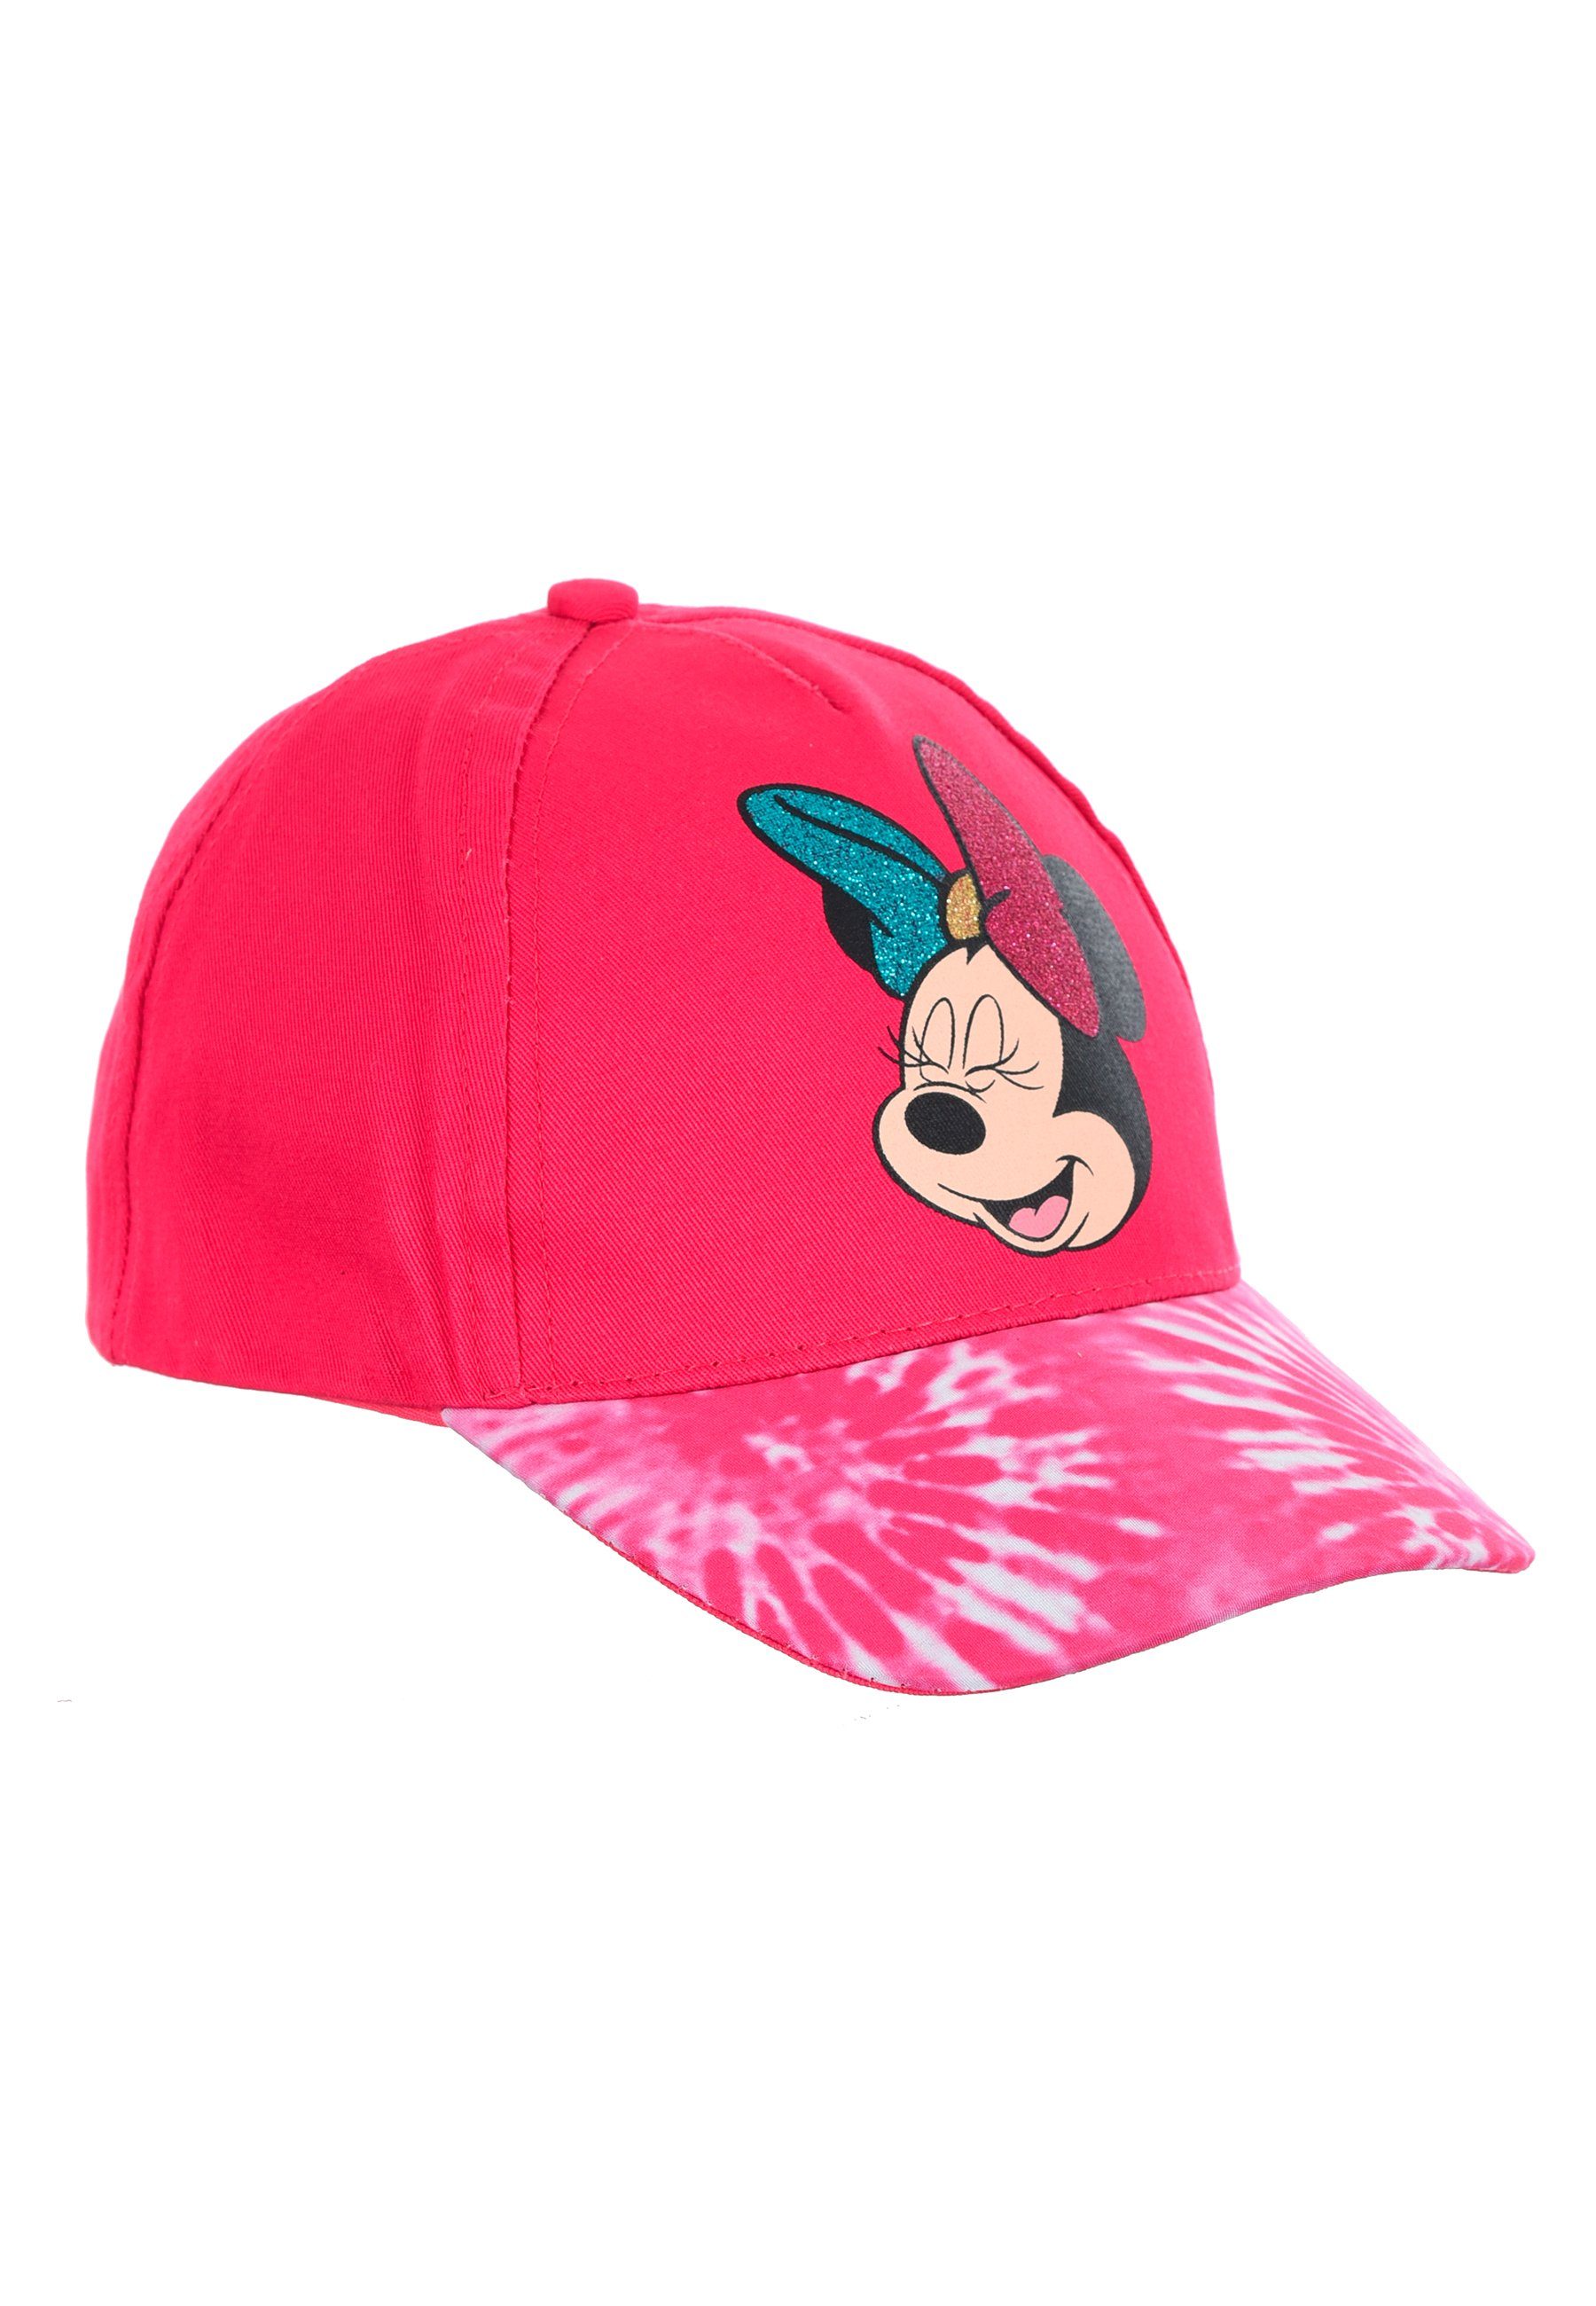 Disney Minnie Mouse Baseball Kappe Mütze Cap Pink Minnie